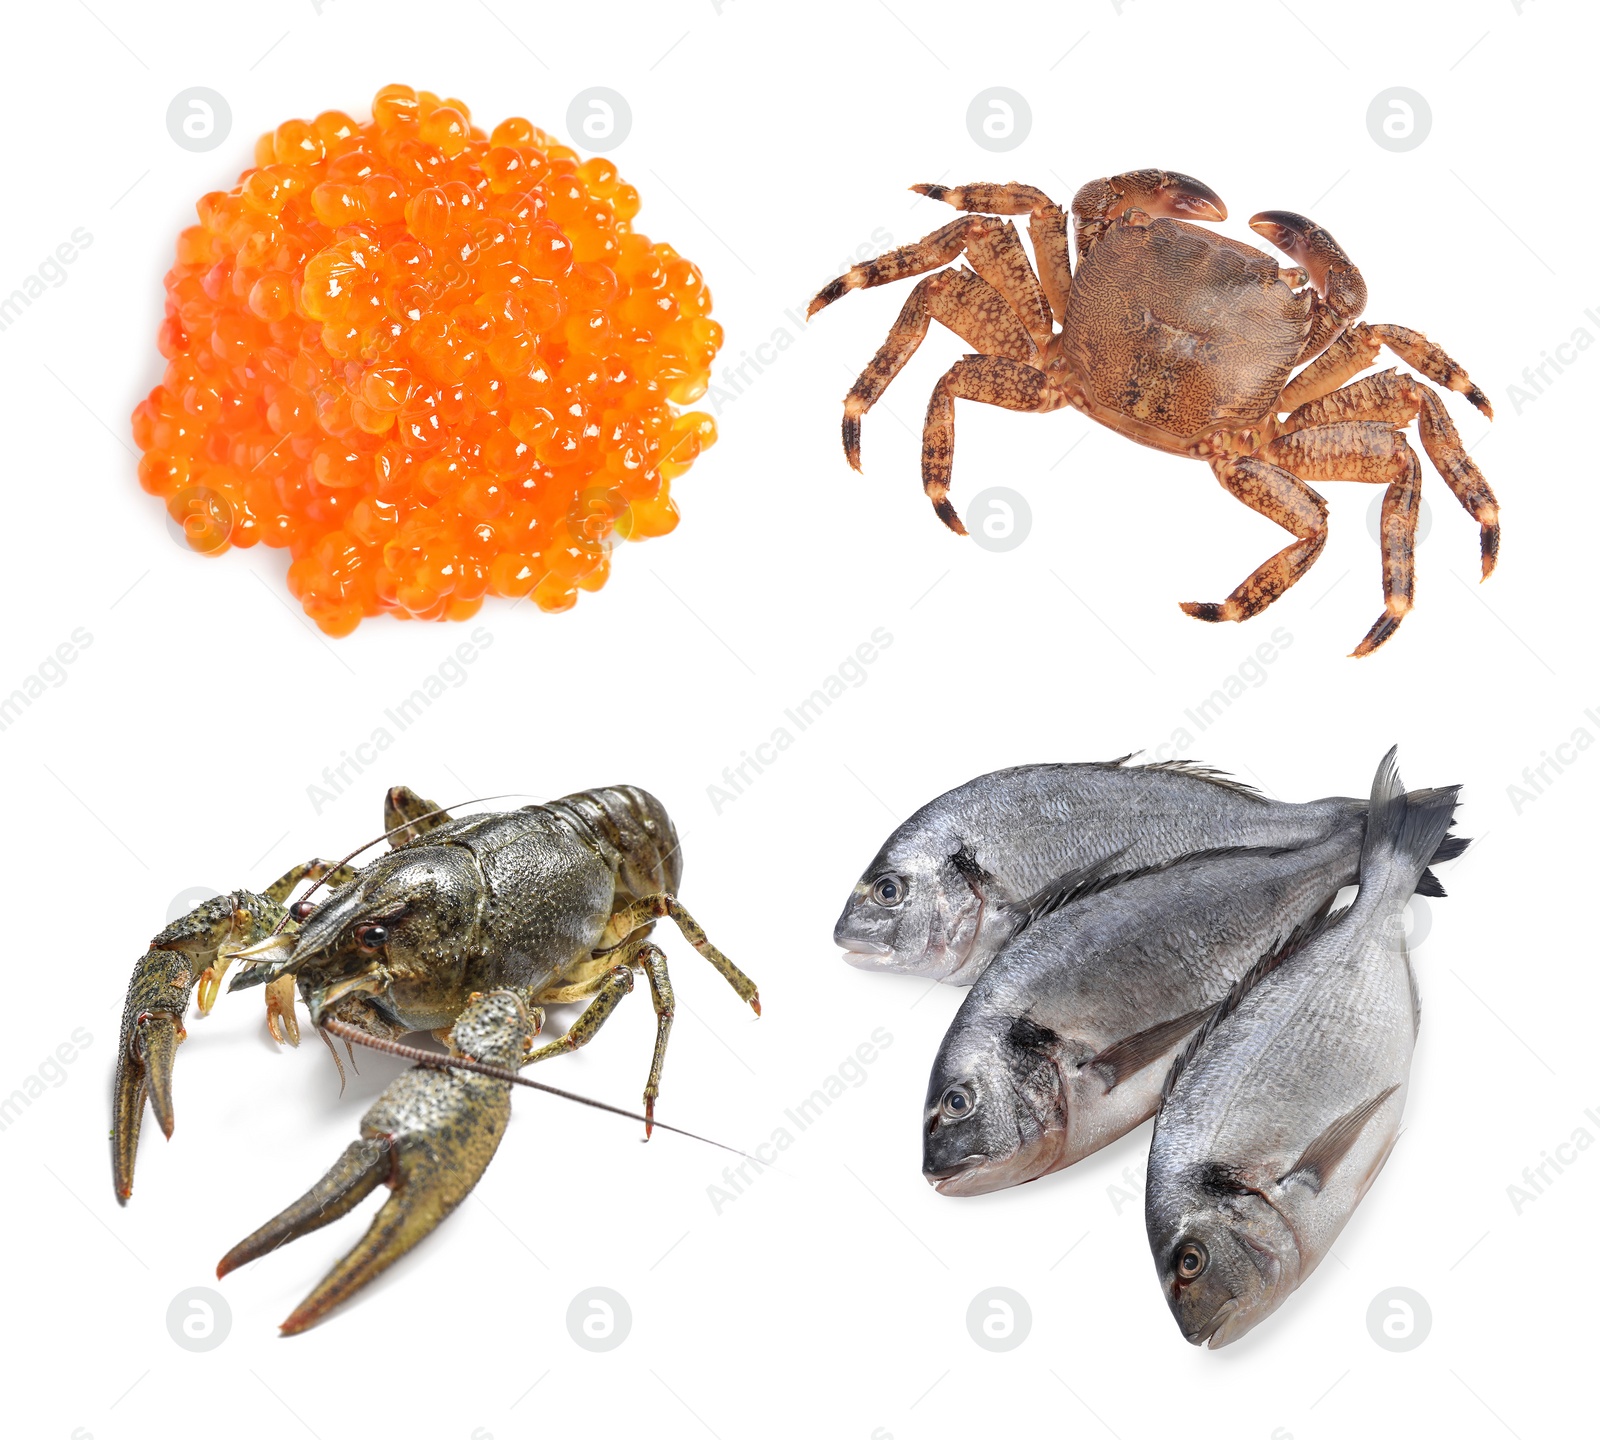 Image of Dorado fish, crab, crayfish and red caviar isolated on white, set